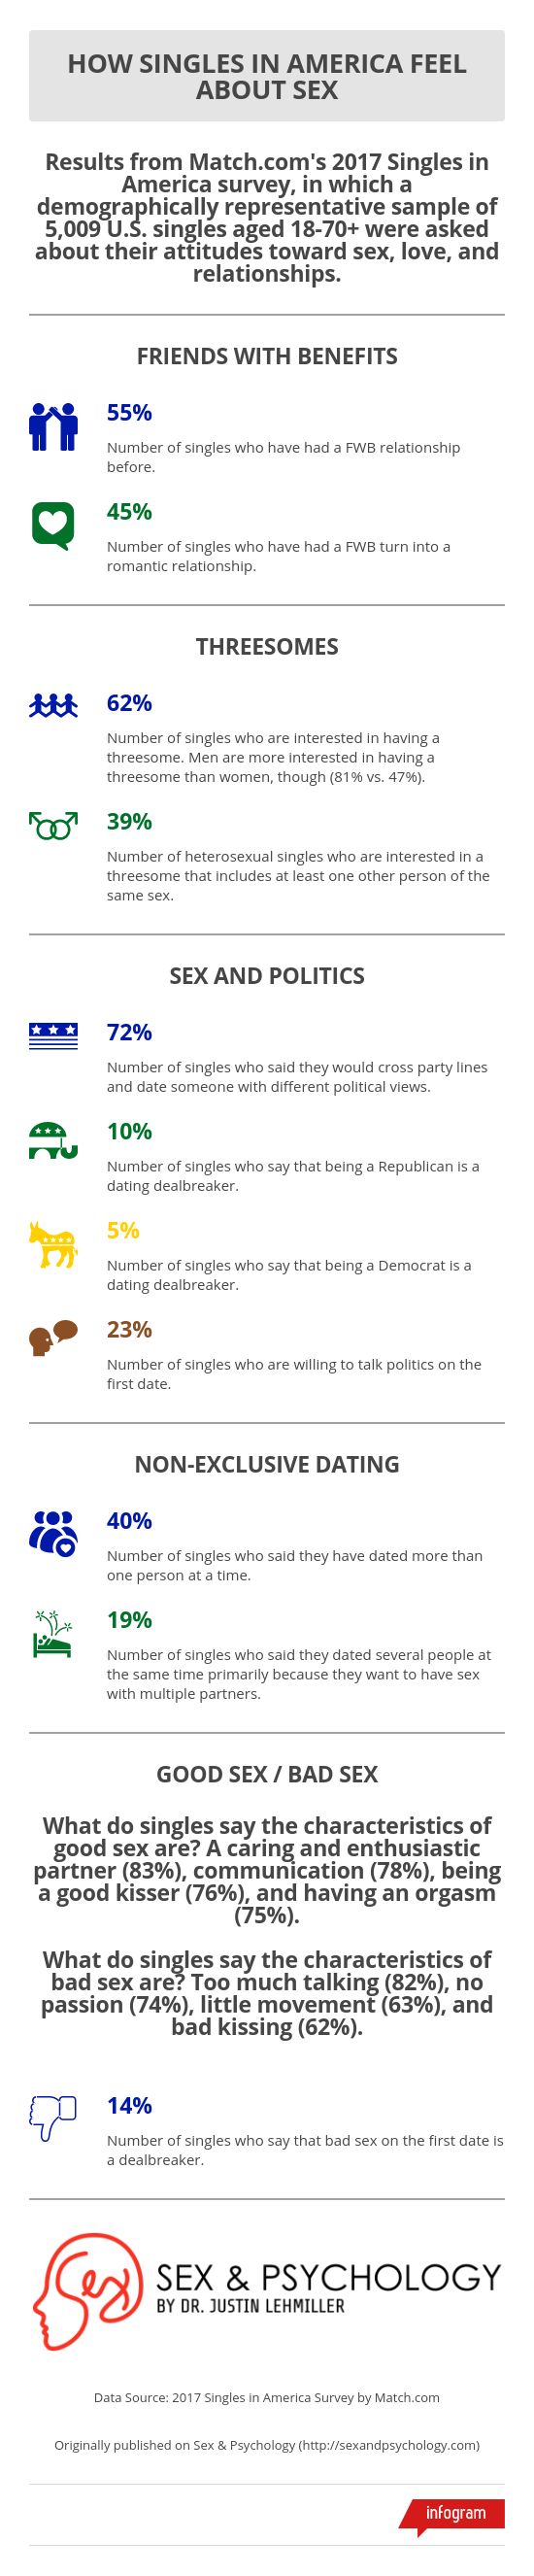 infographic-singles-attitudes-toward-sex.jpg